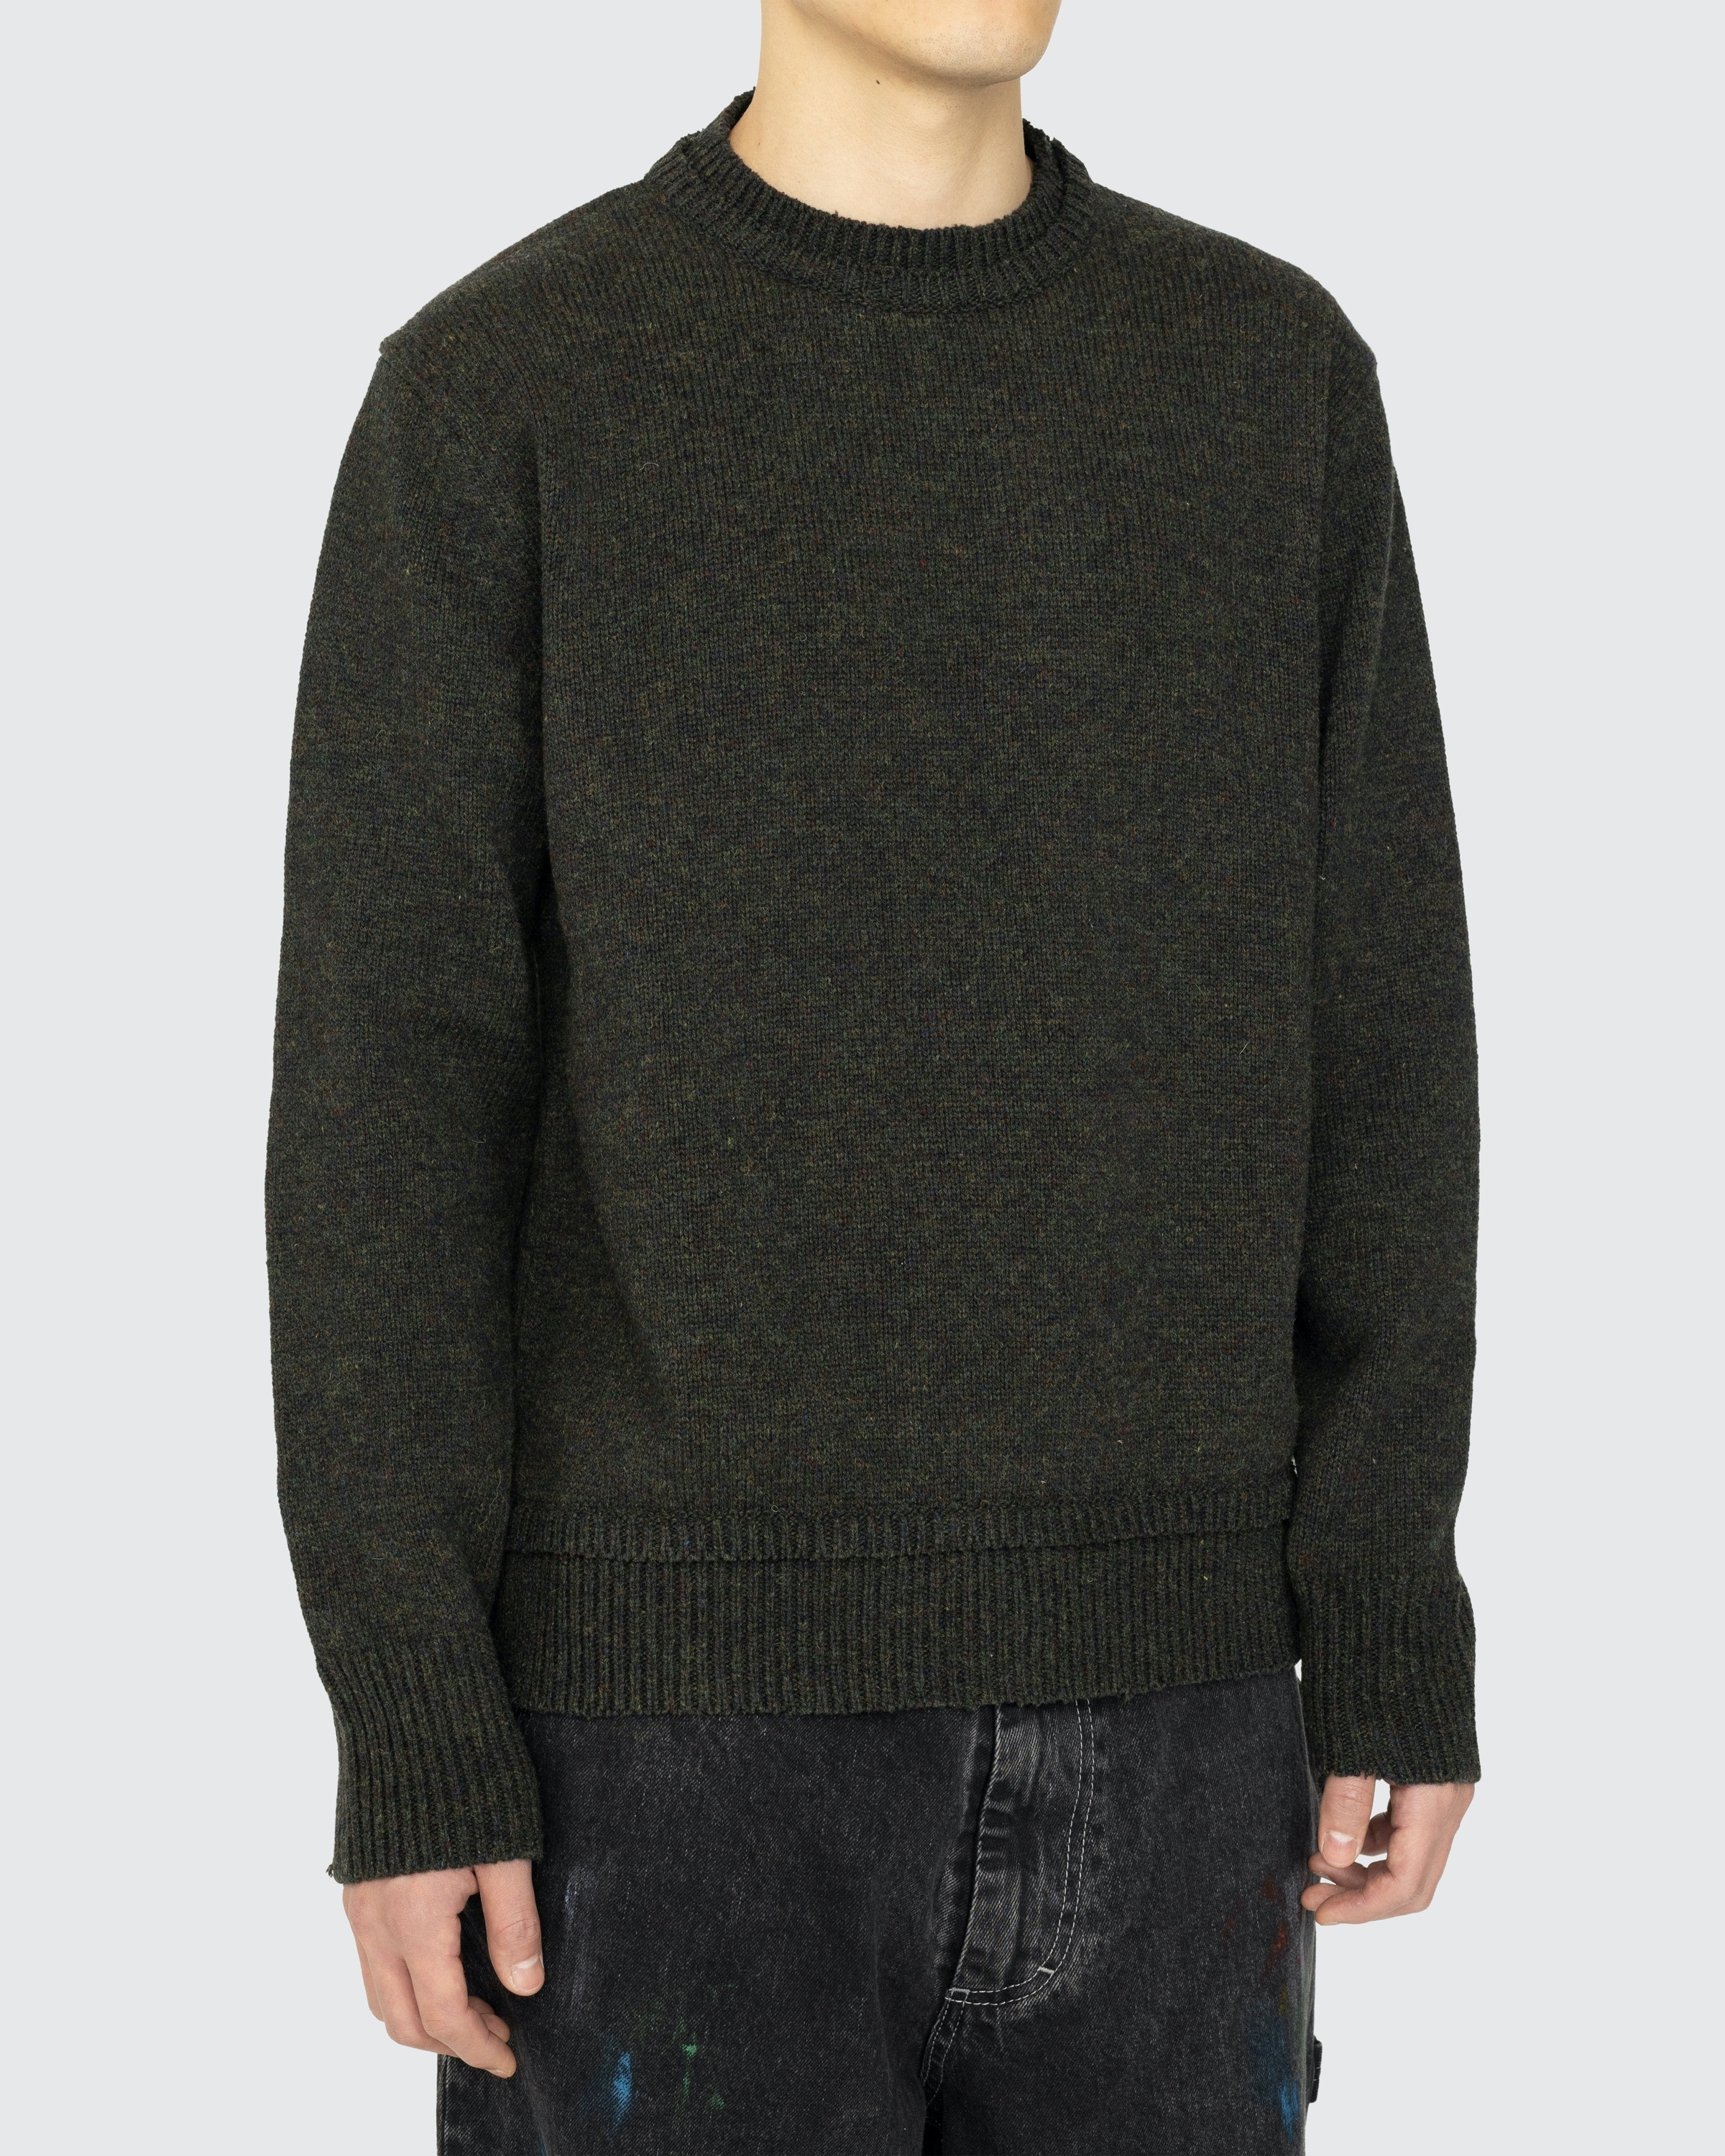 Maison Margiela – Elbow Patch Sweater Dark Green - Crewnecks - Green - Image 3